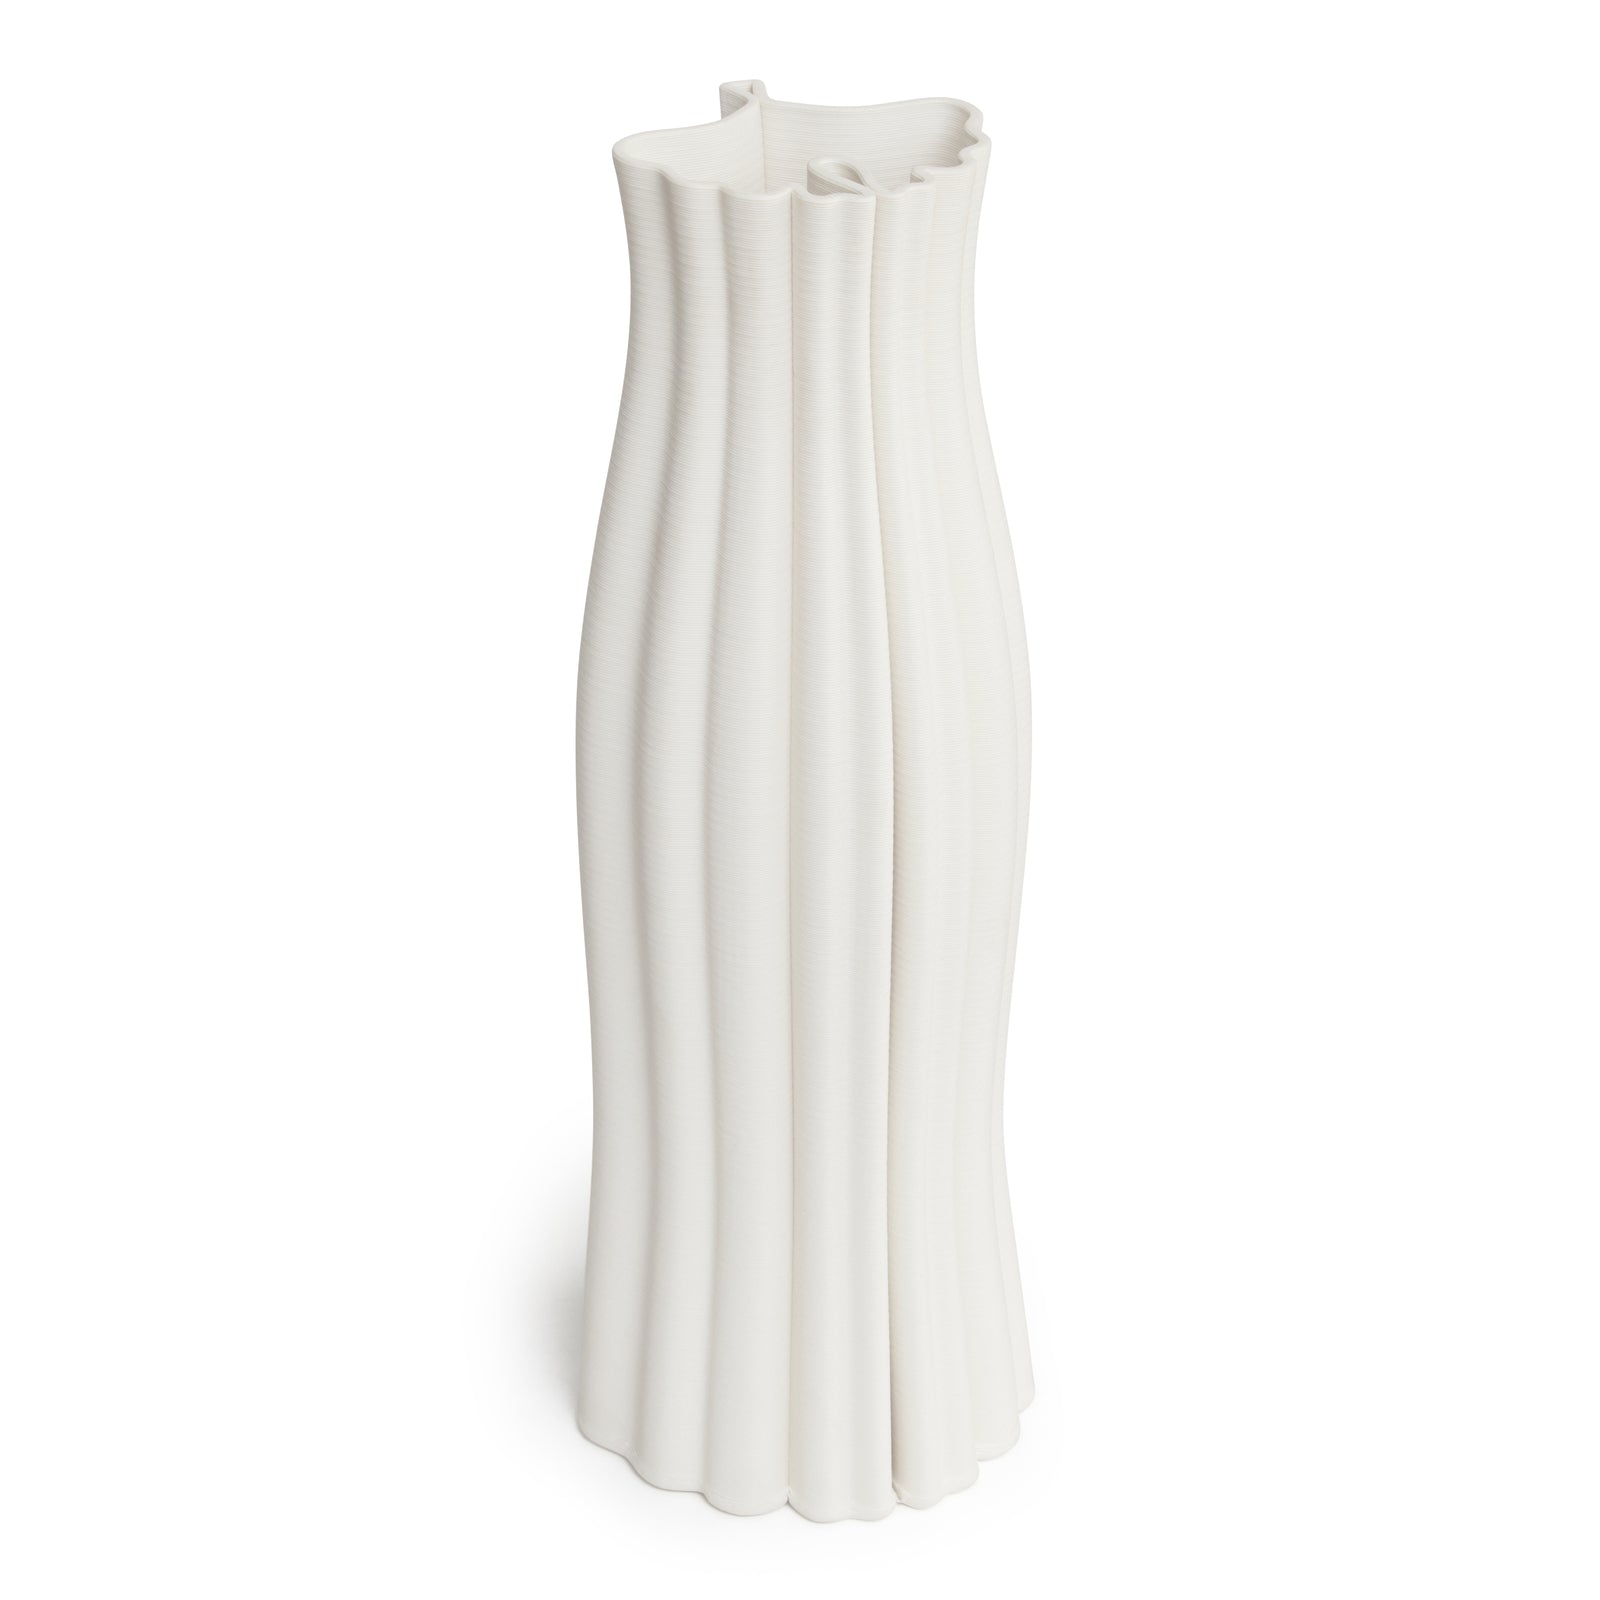 AVA White Vase 47cm